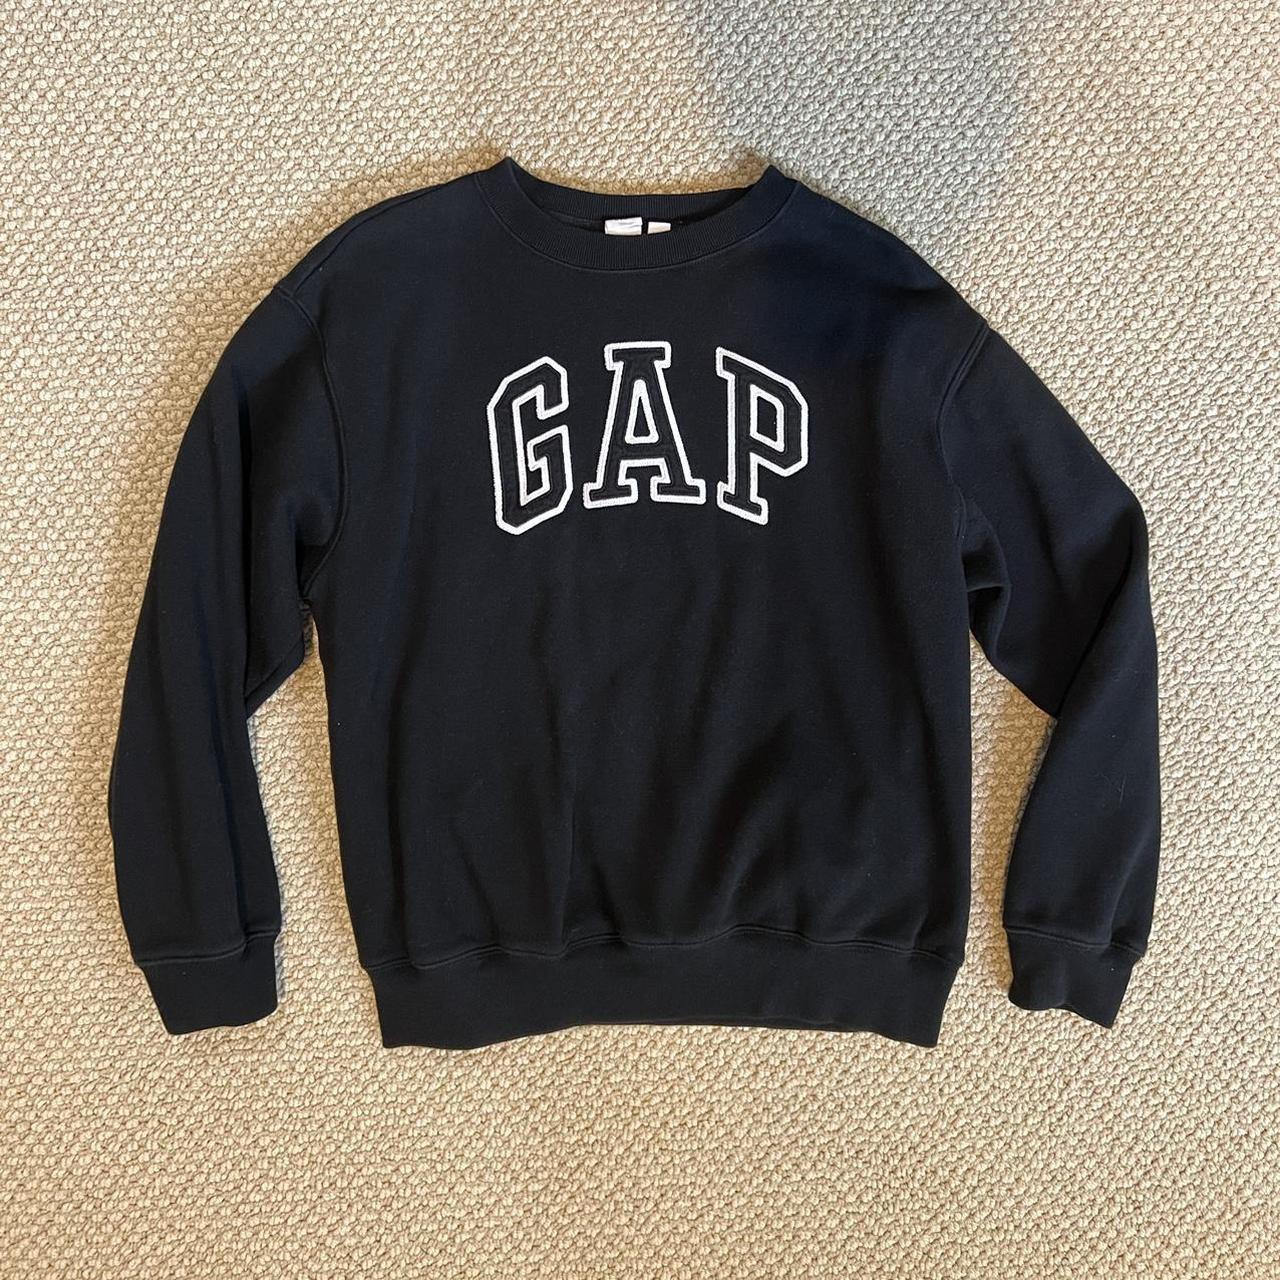 The Gap Women's Crewneck Sweater